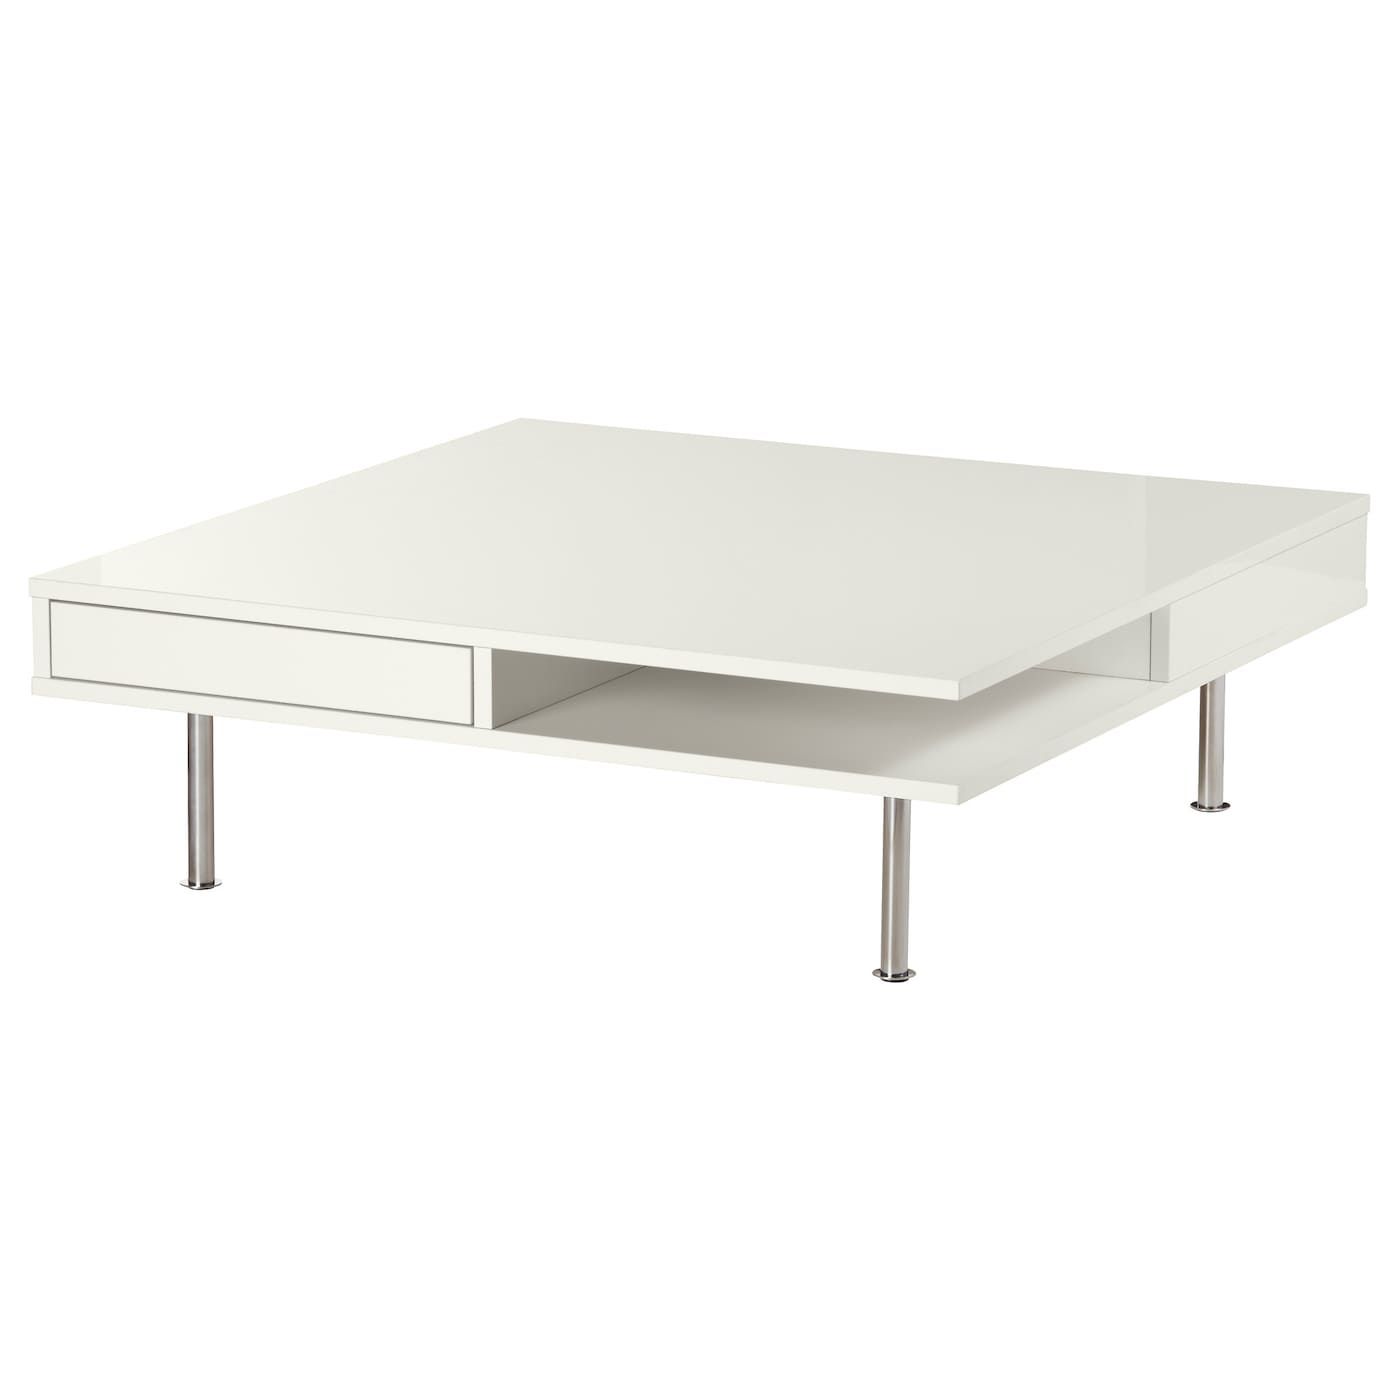 IKEA Coffee Table: TOFTERYD white gloss